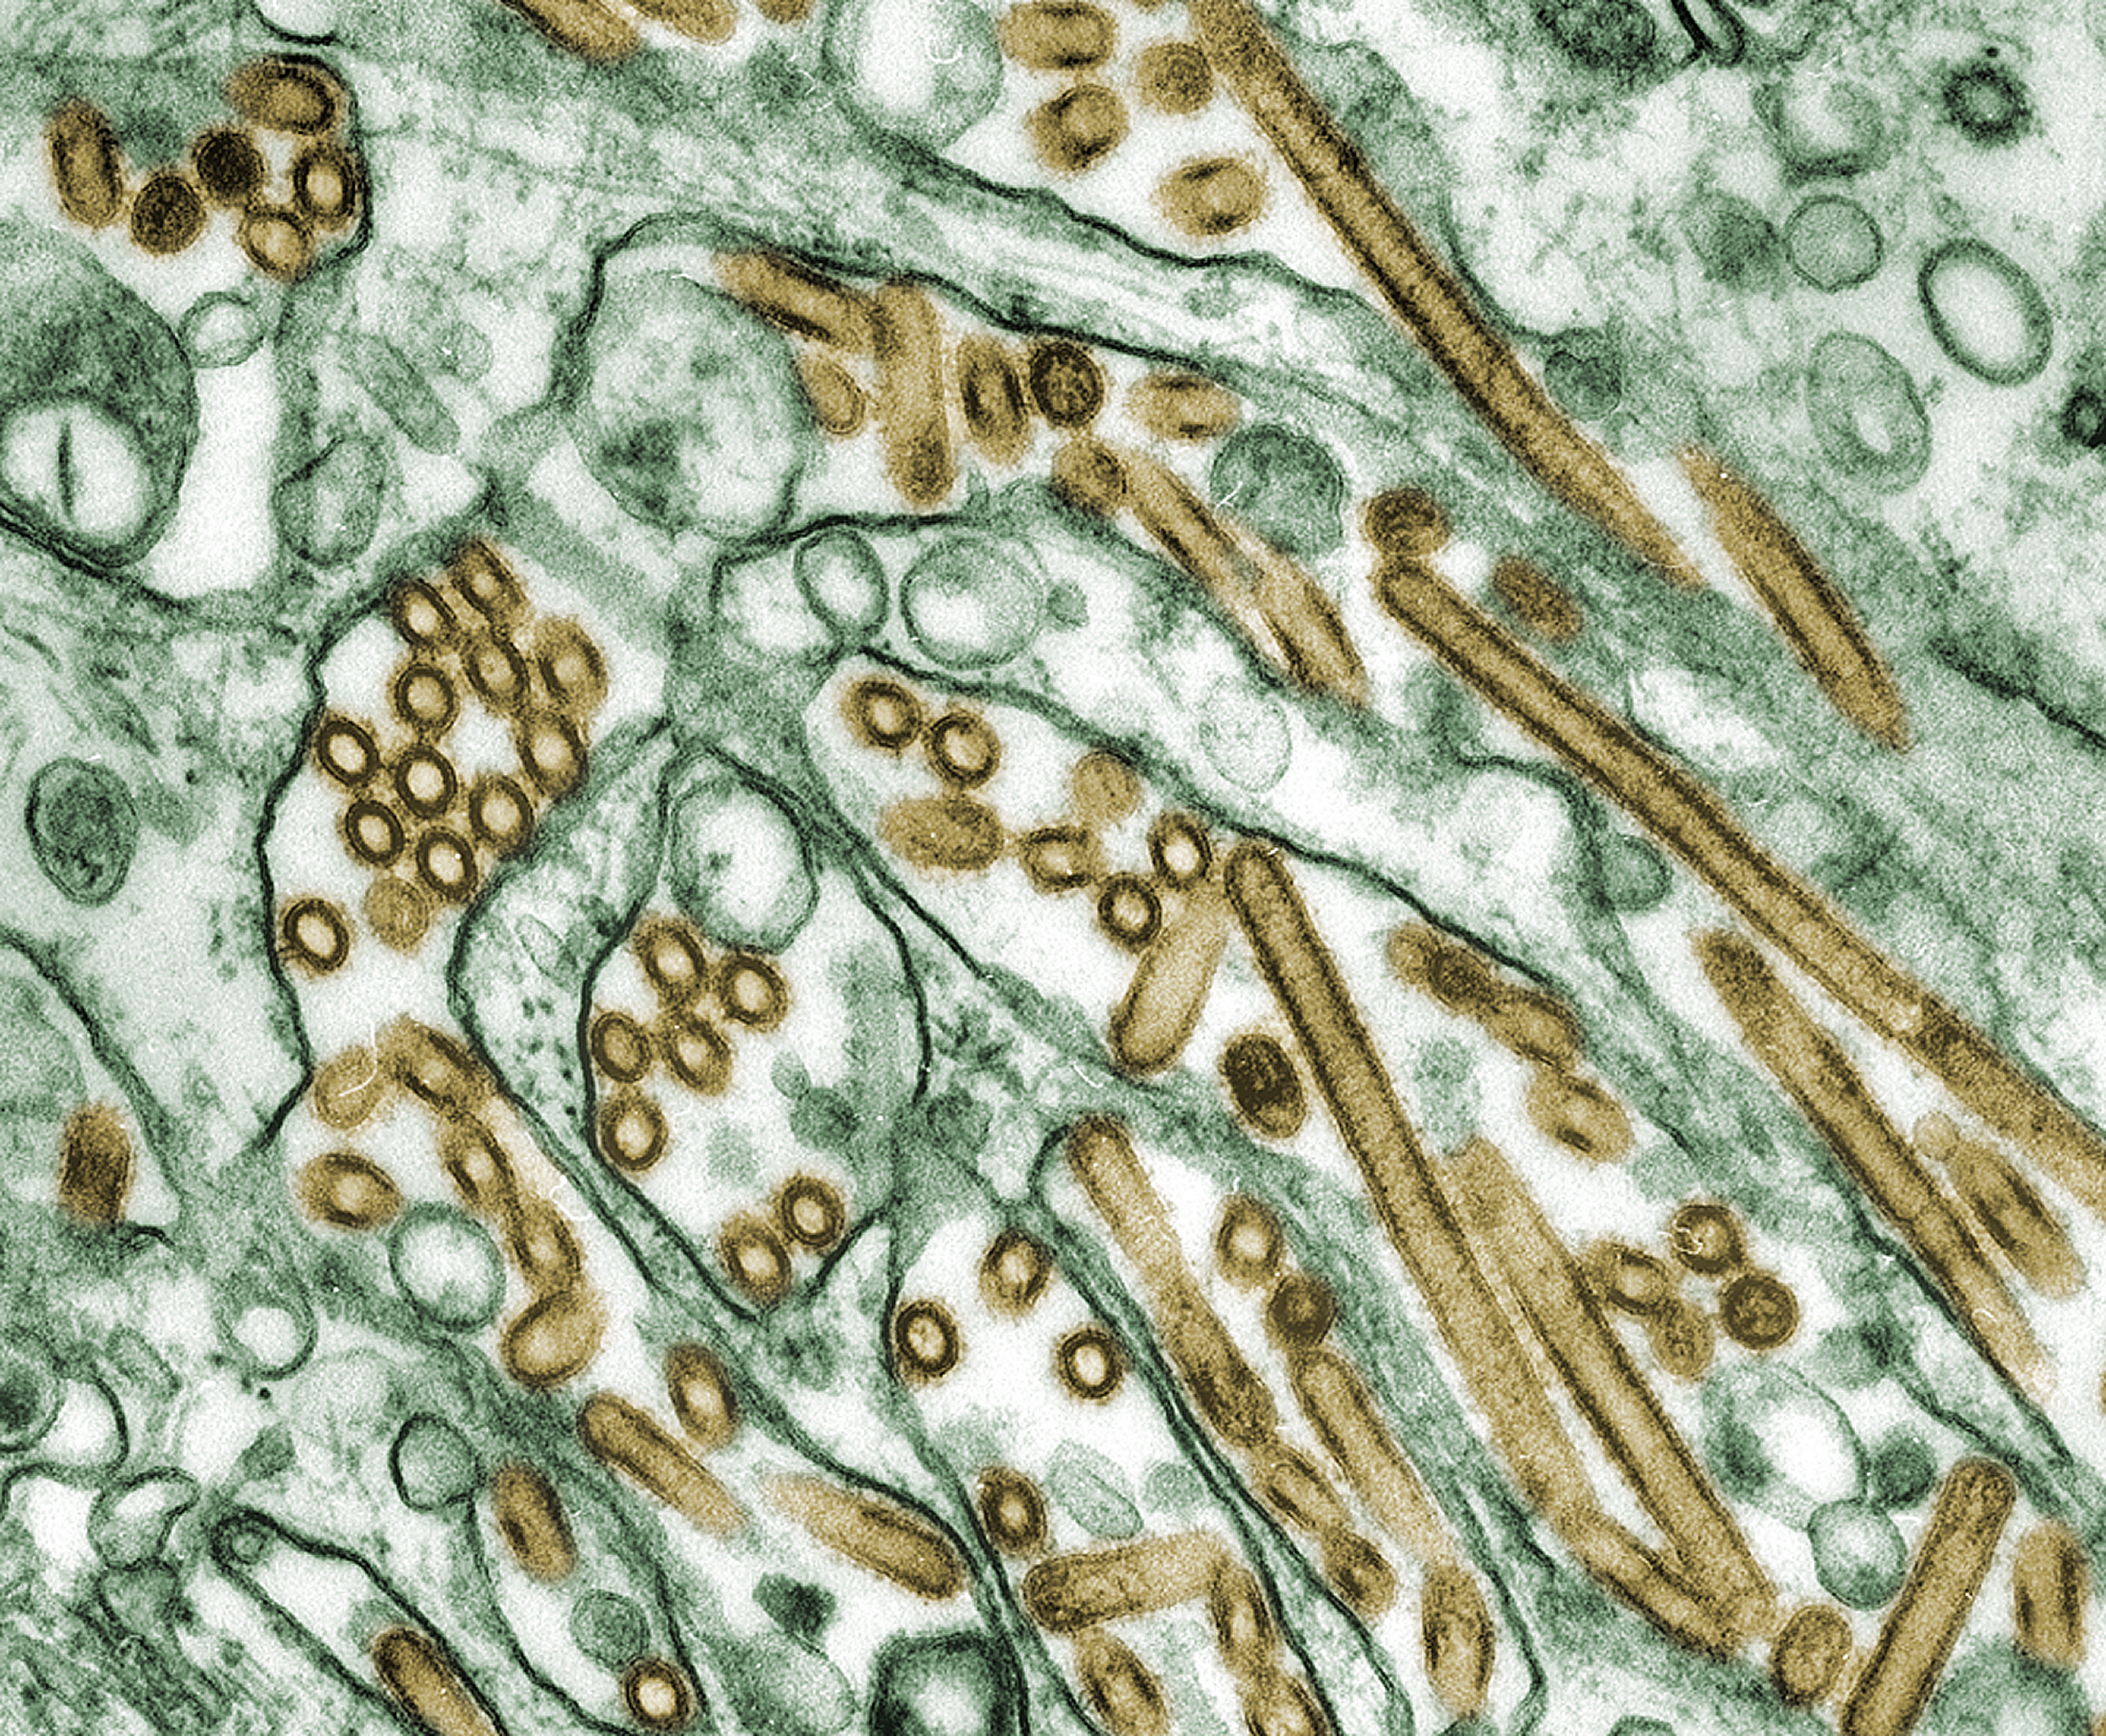 Avian Flu Micrograph